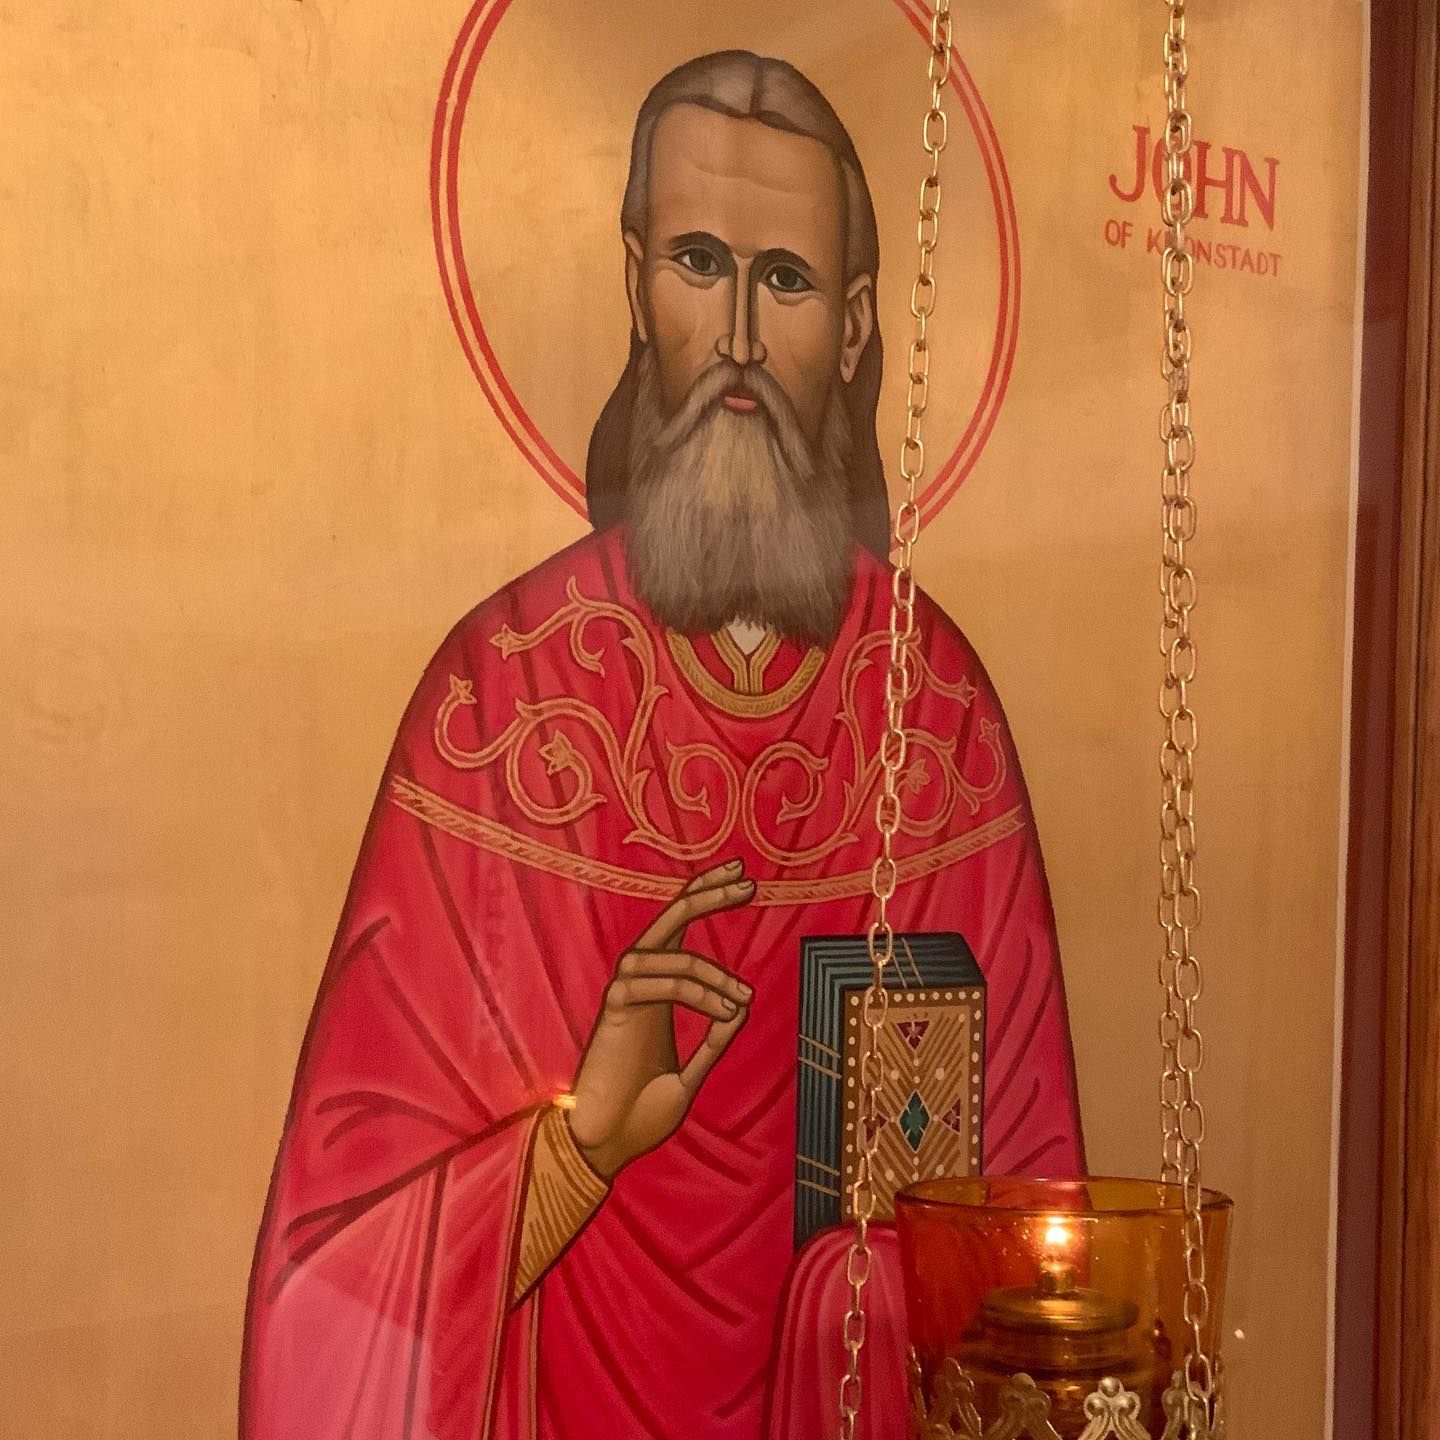 Saint John of Kronstadt on the Incarnation